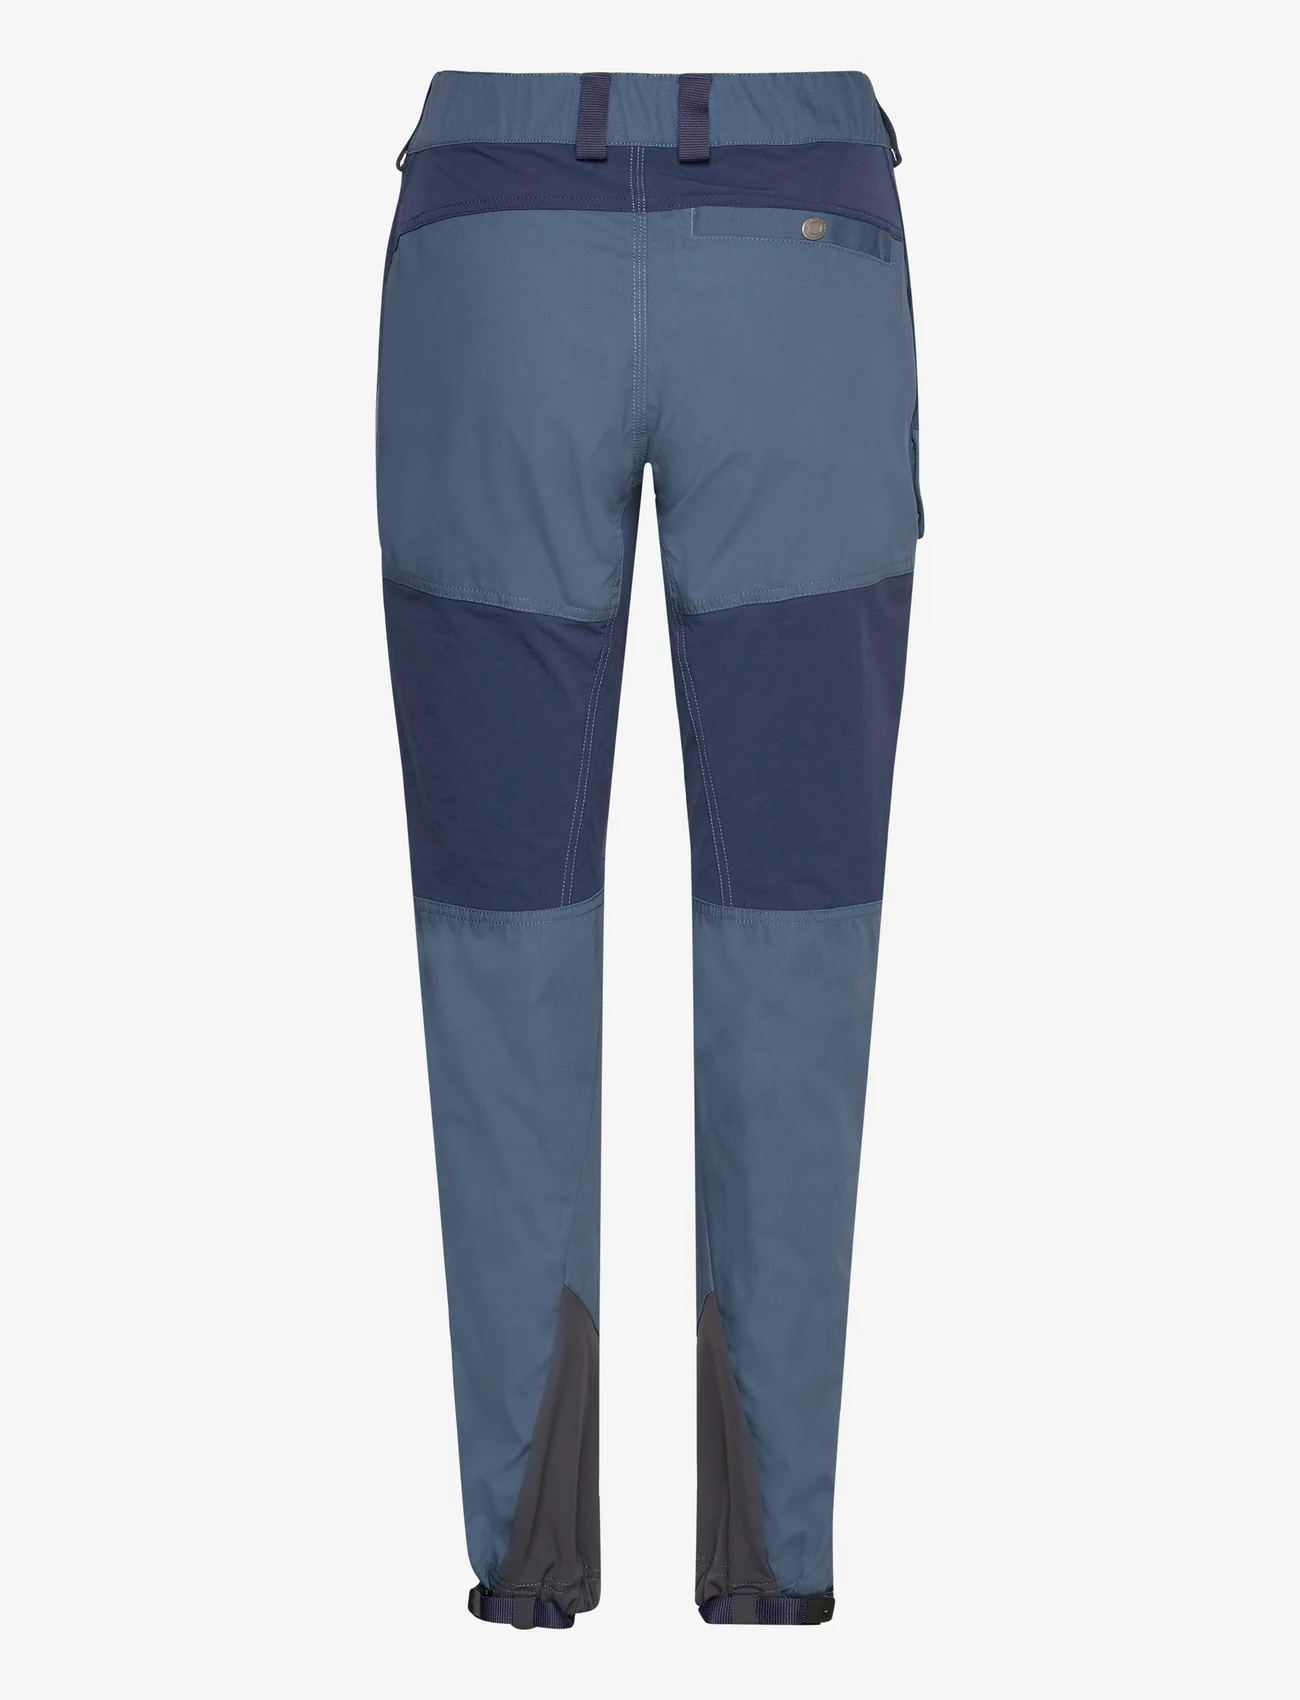 Bergans - Nordmarka Favor Outdoor Pants Women - orion blue/navy blue - 1